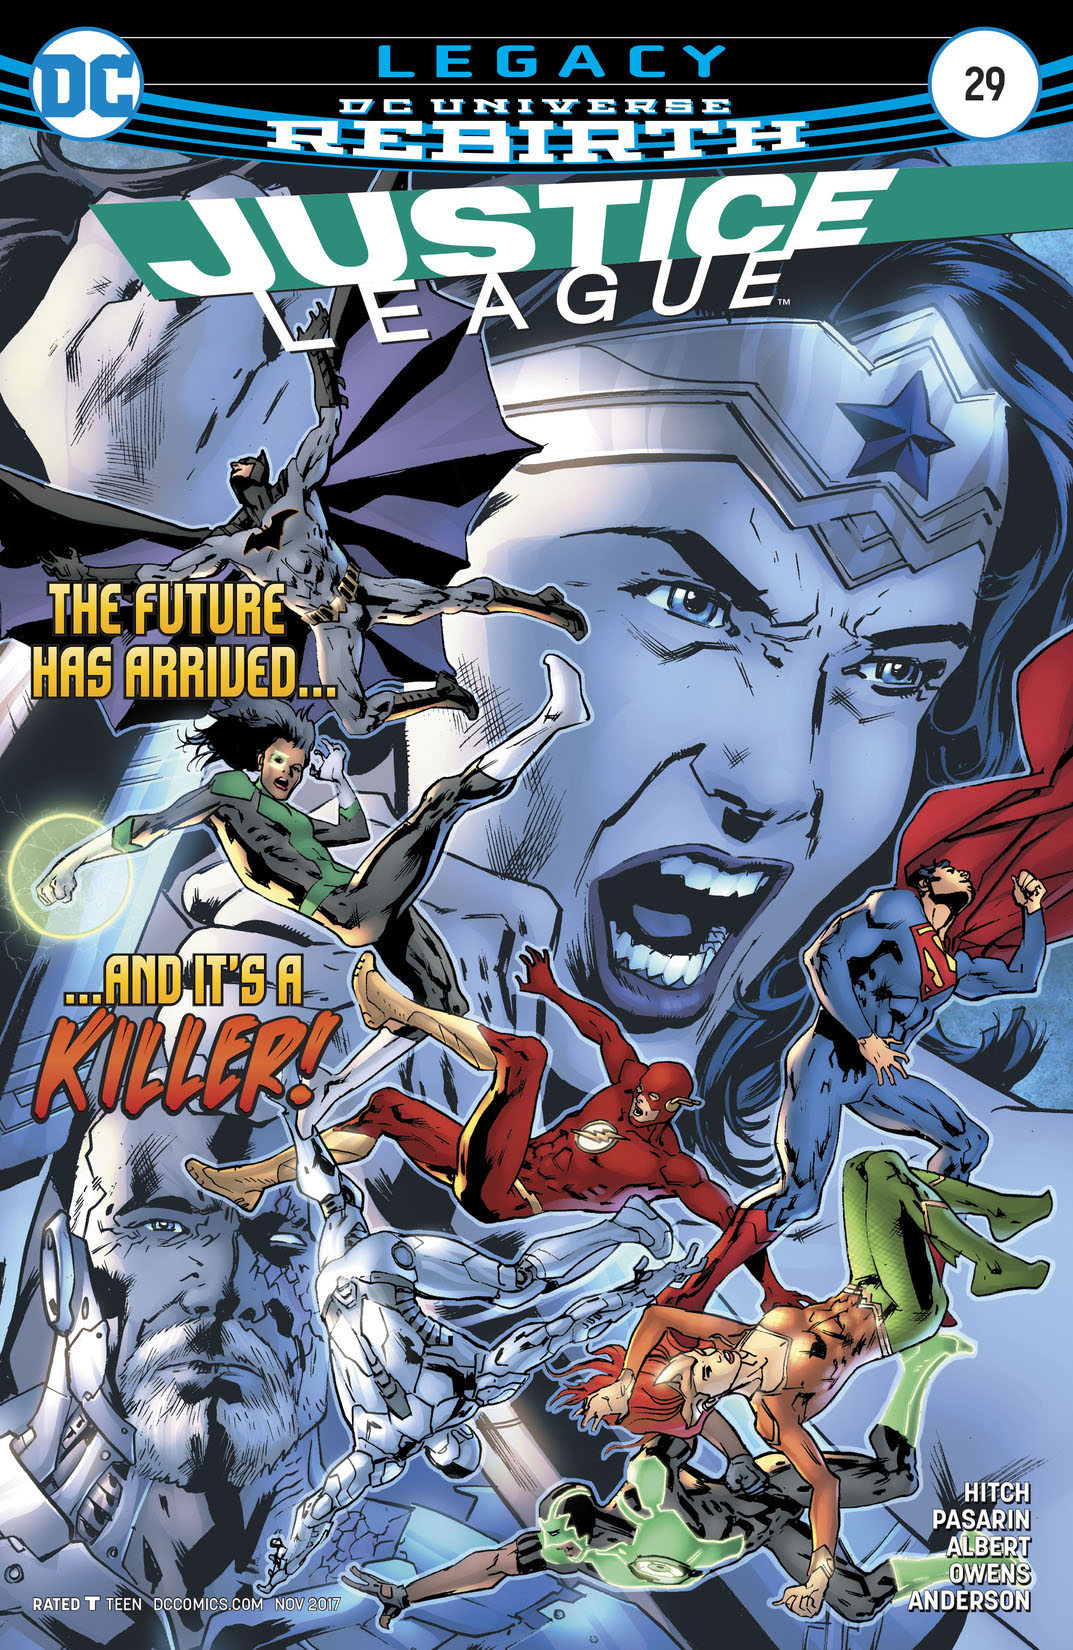 Justice League (2016-) #29 preview images